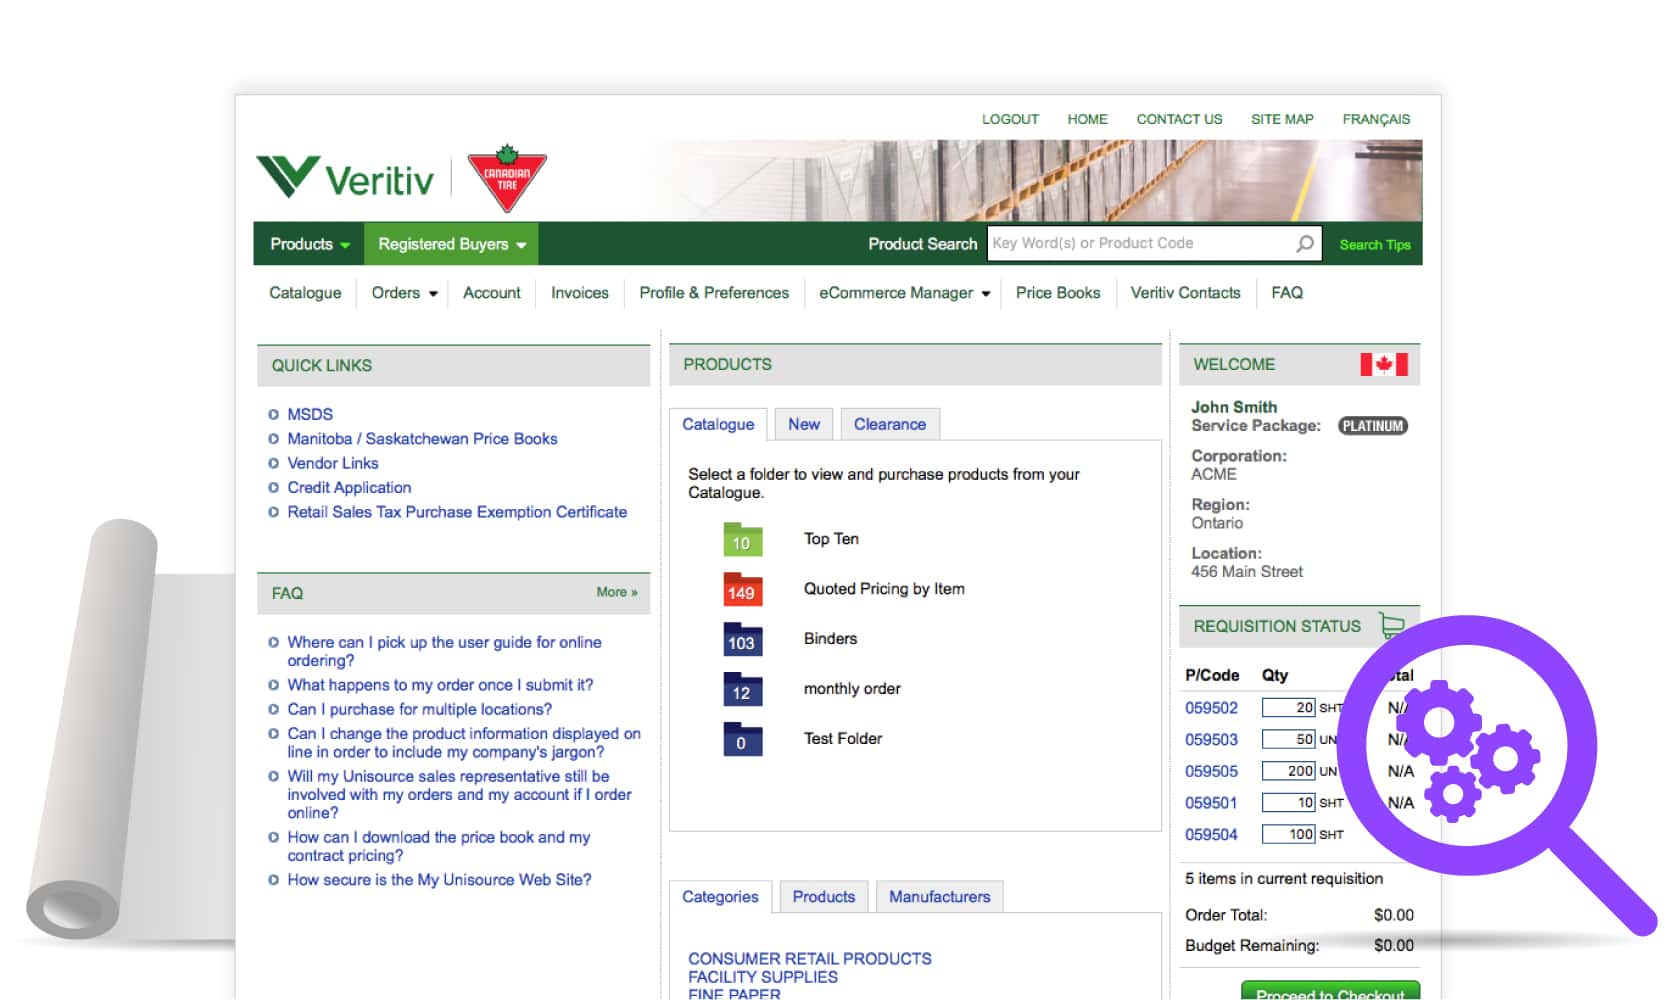 Screenshot of the Veritiv homepage